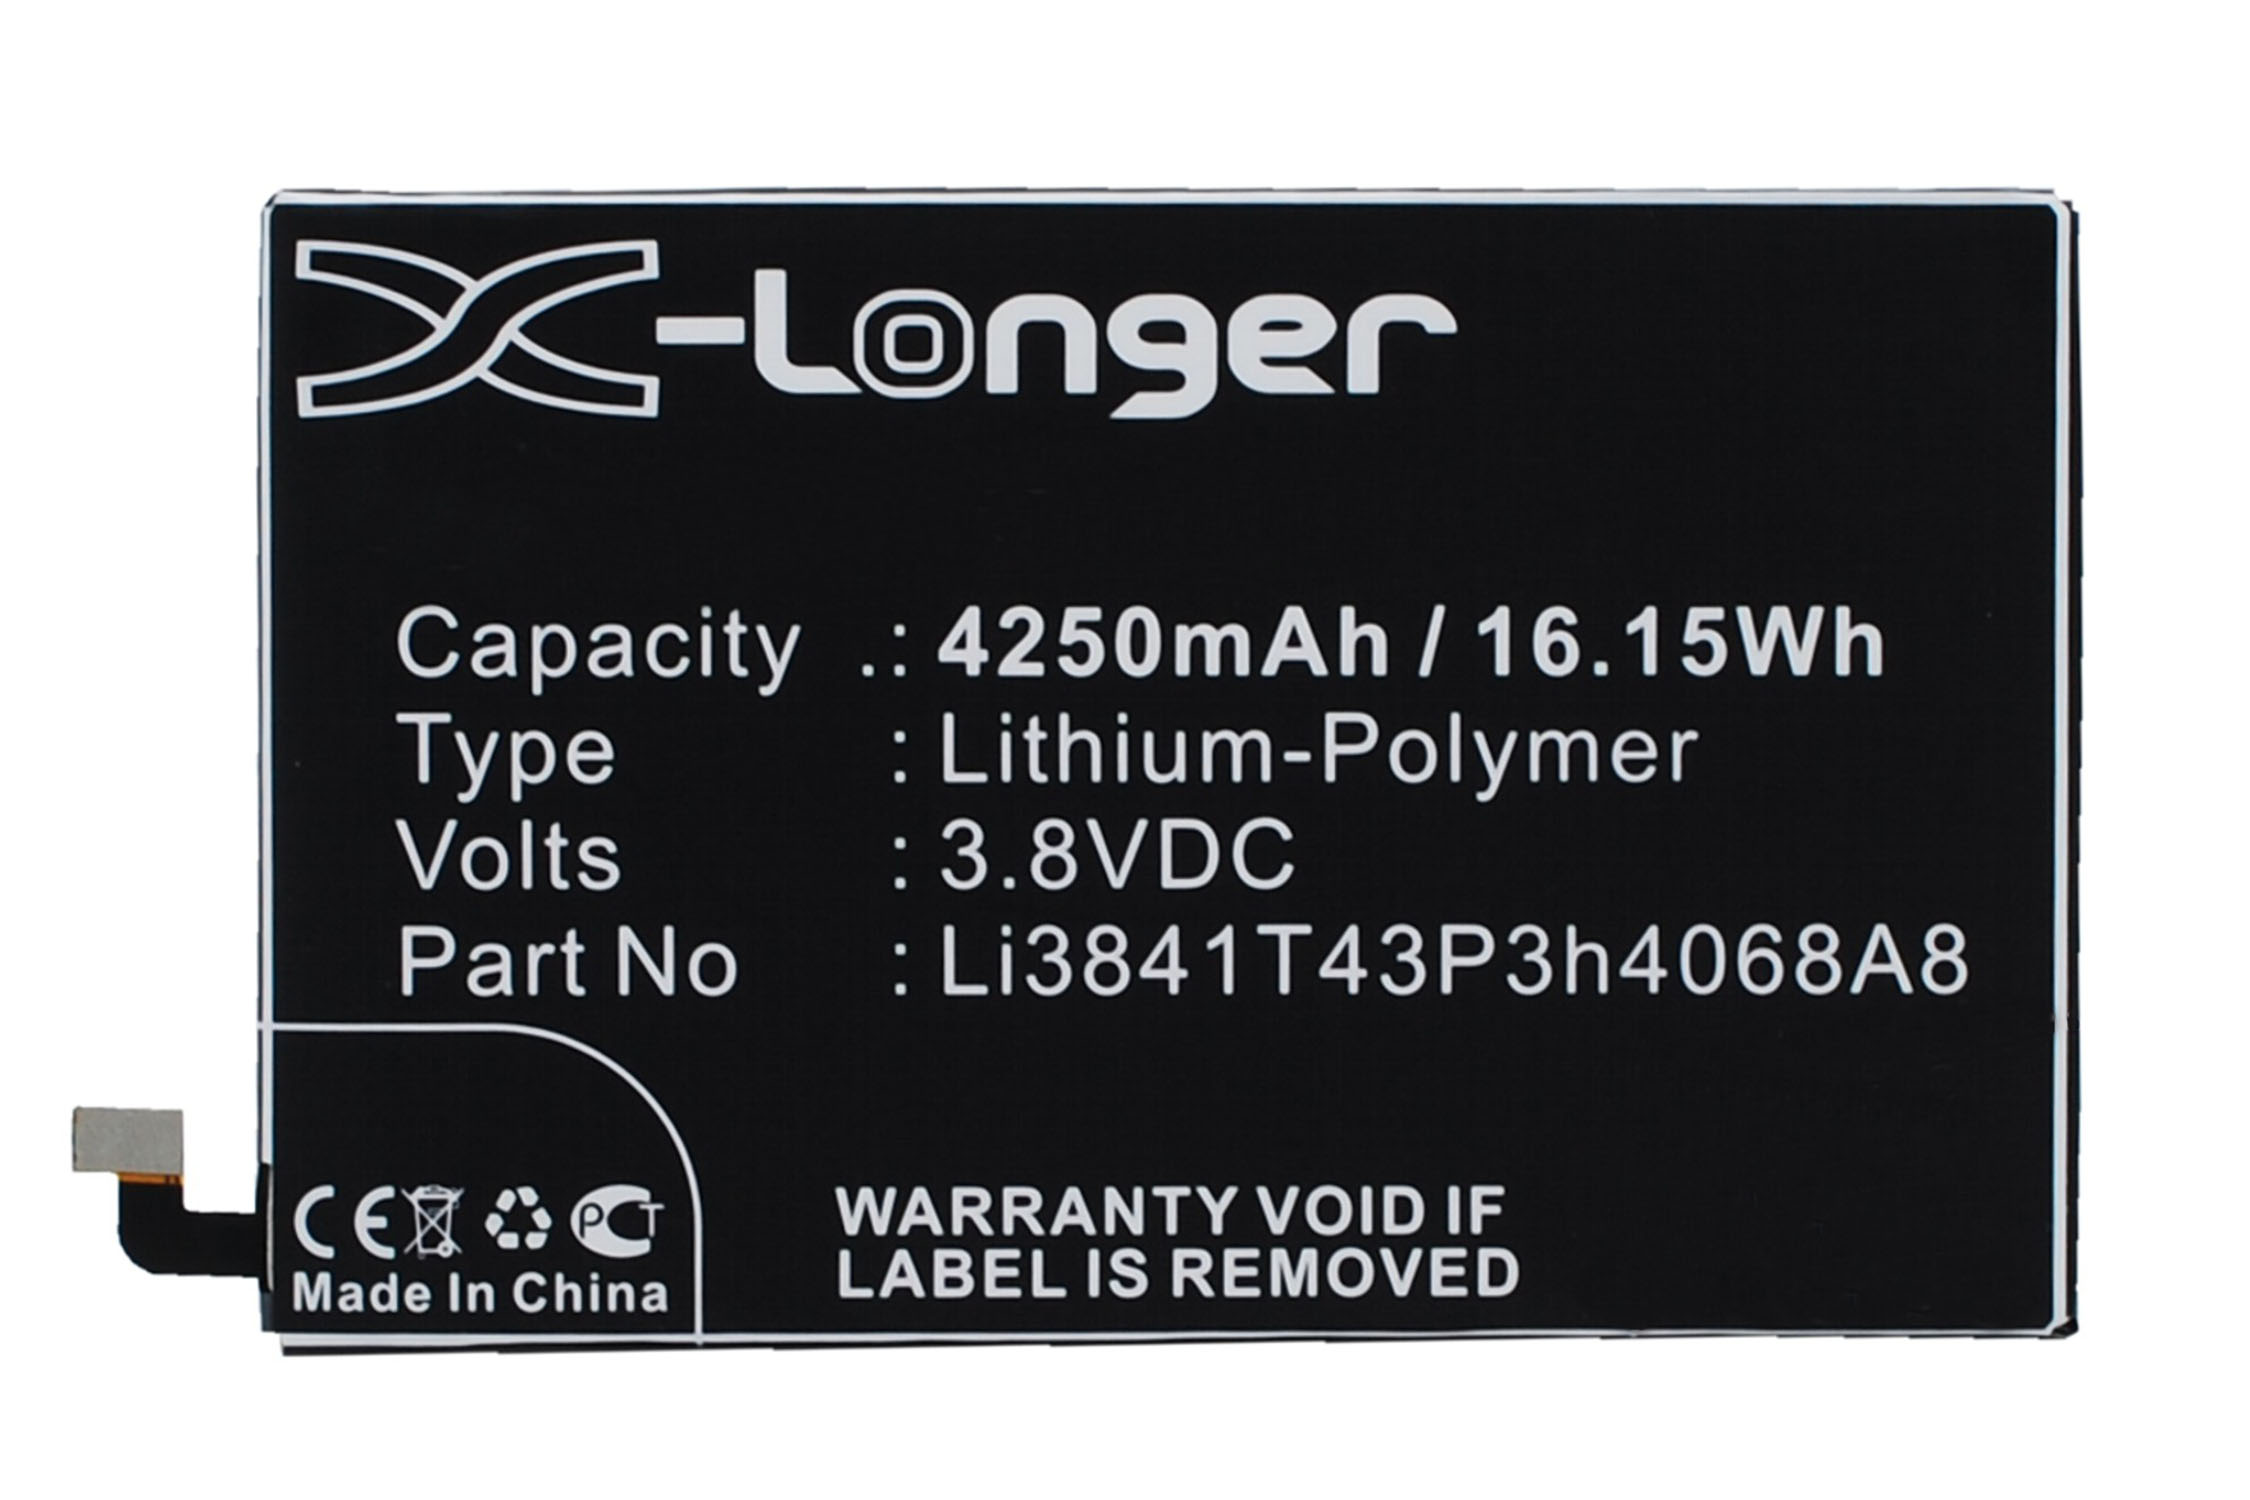 Synergy Digital Battery Compatible With ZTE Li3841T43P3h4068A8 Cellphone Battery - (Li-Pol, 3.8V, 4250 mAh / 16.15Wh)